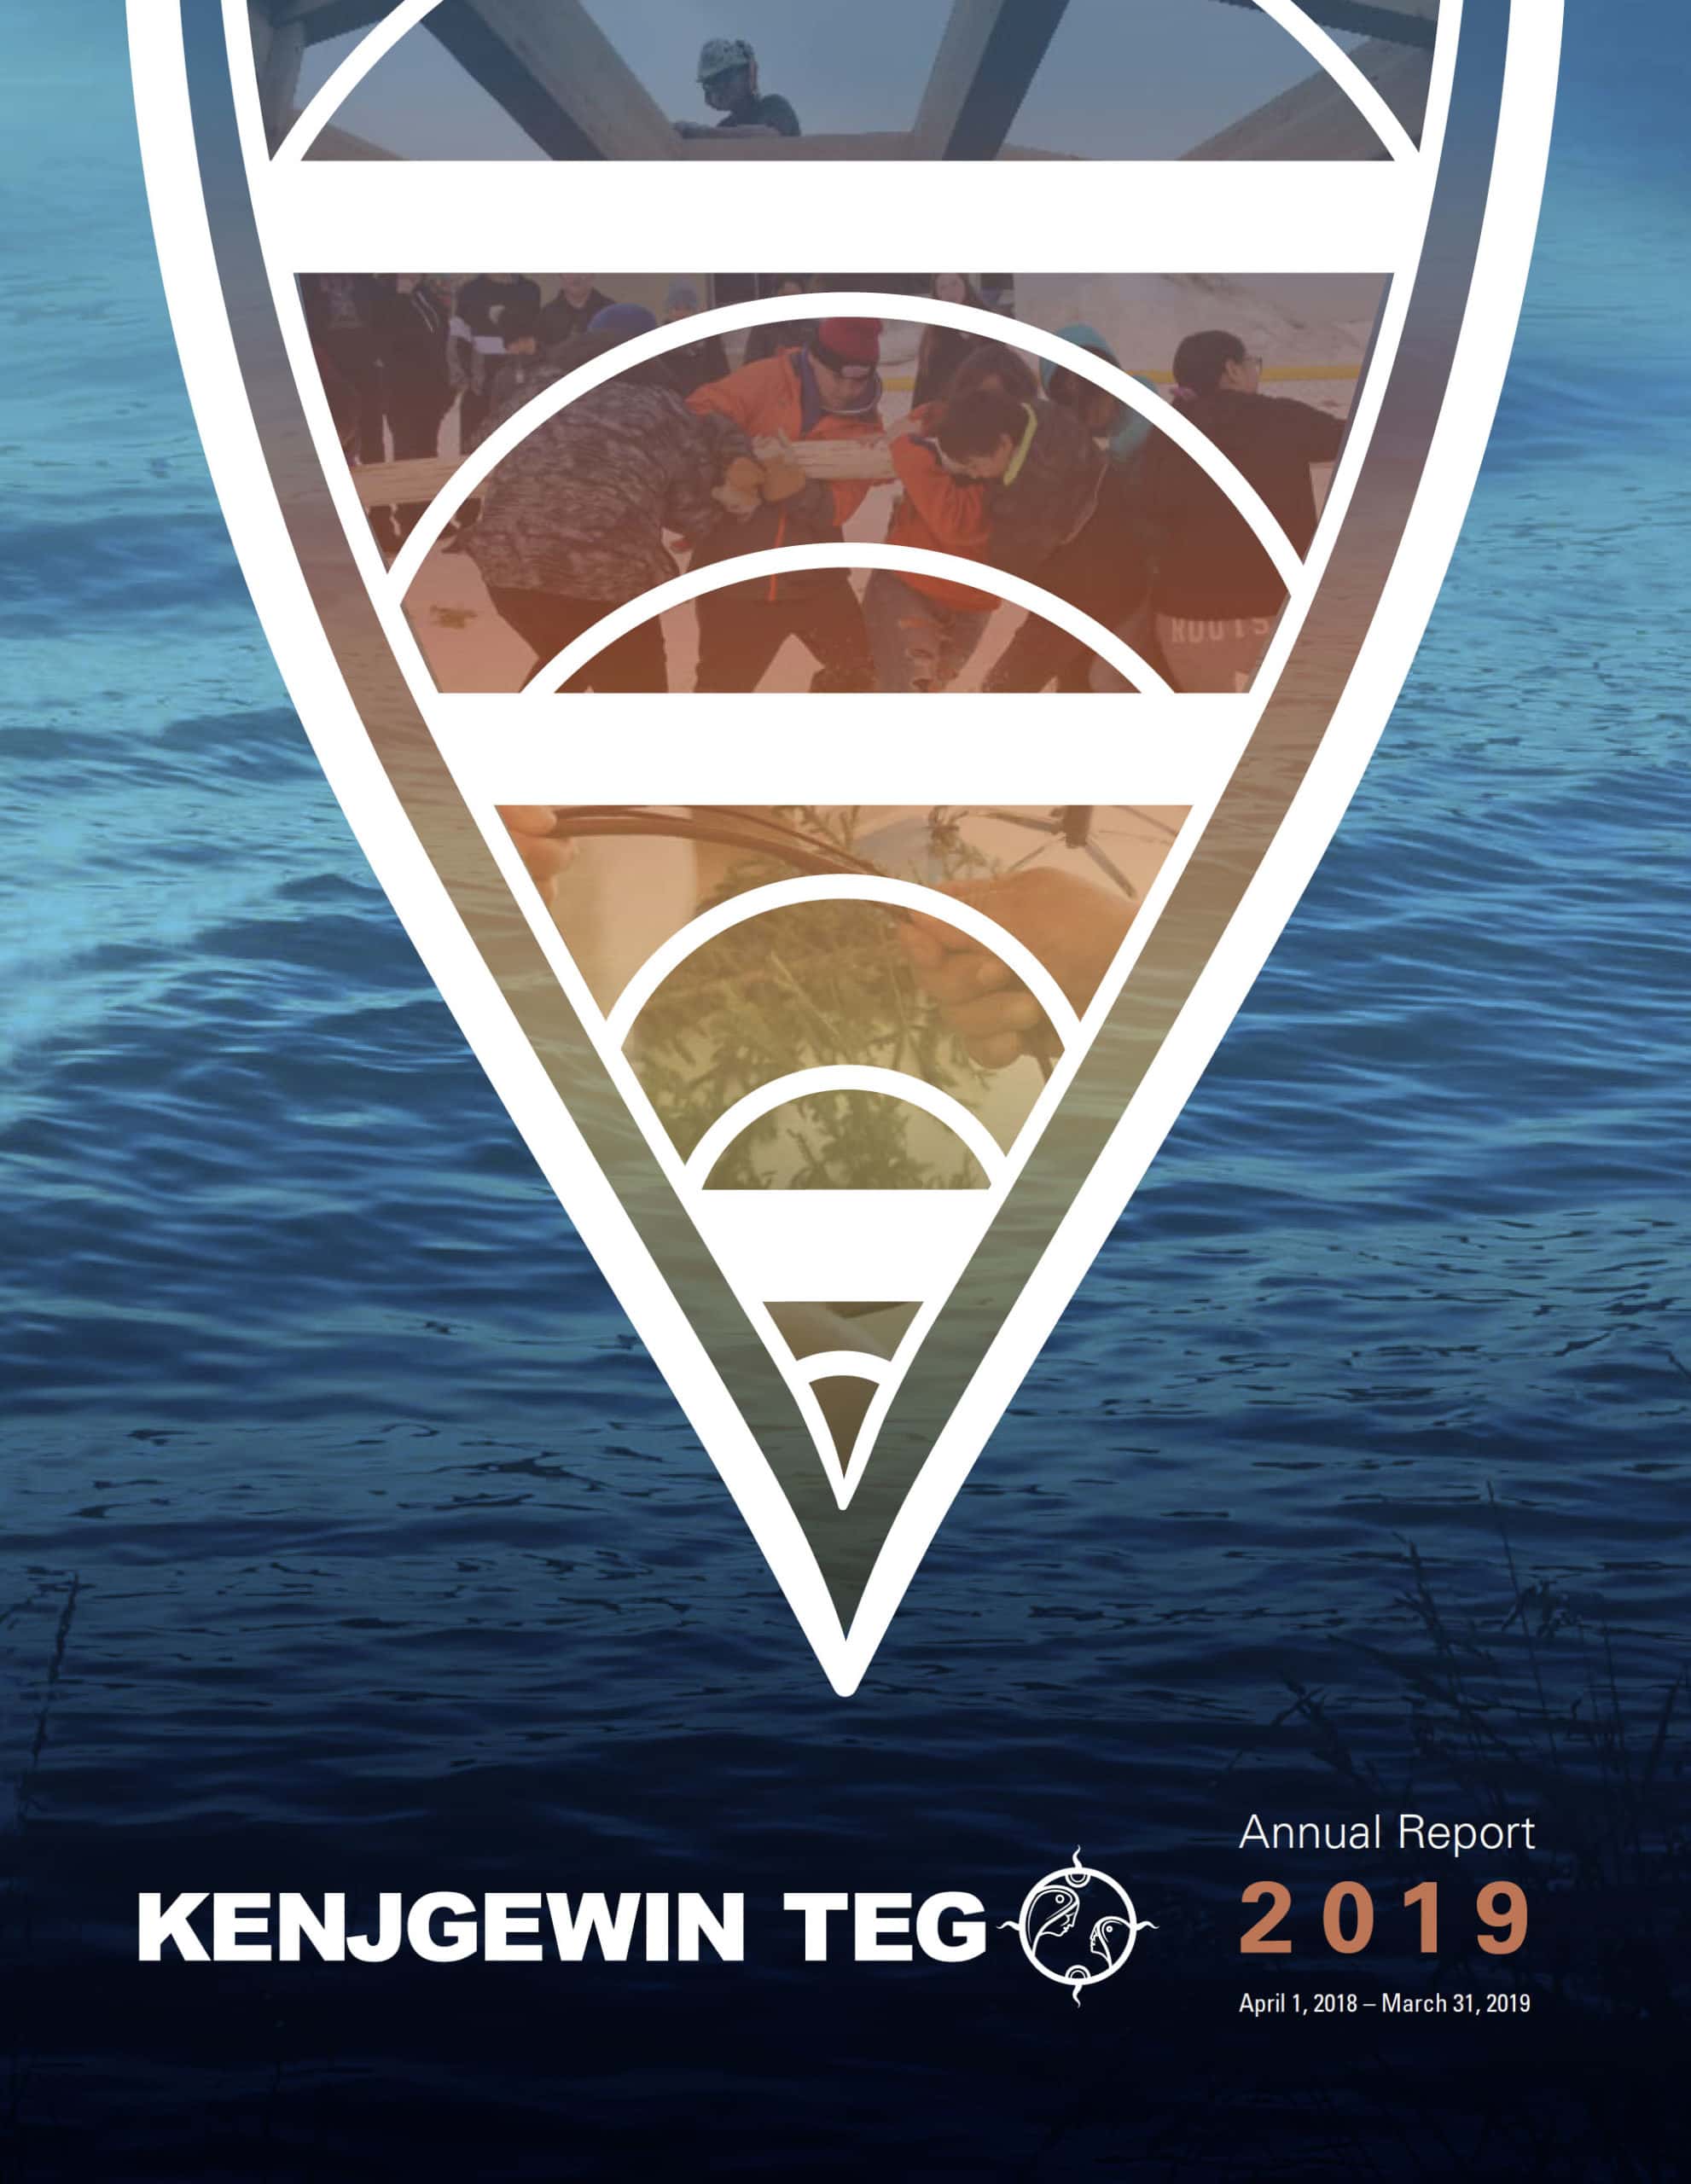 Kenjgewin Teg Annual Report 2019 cover